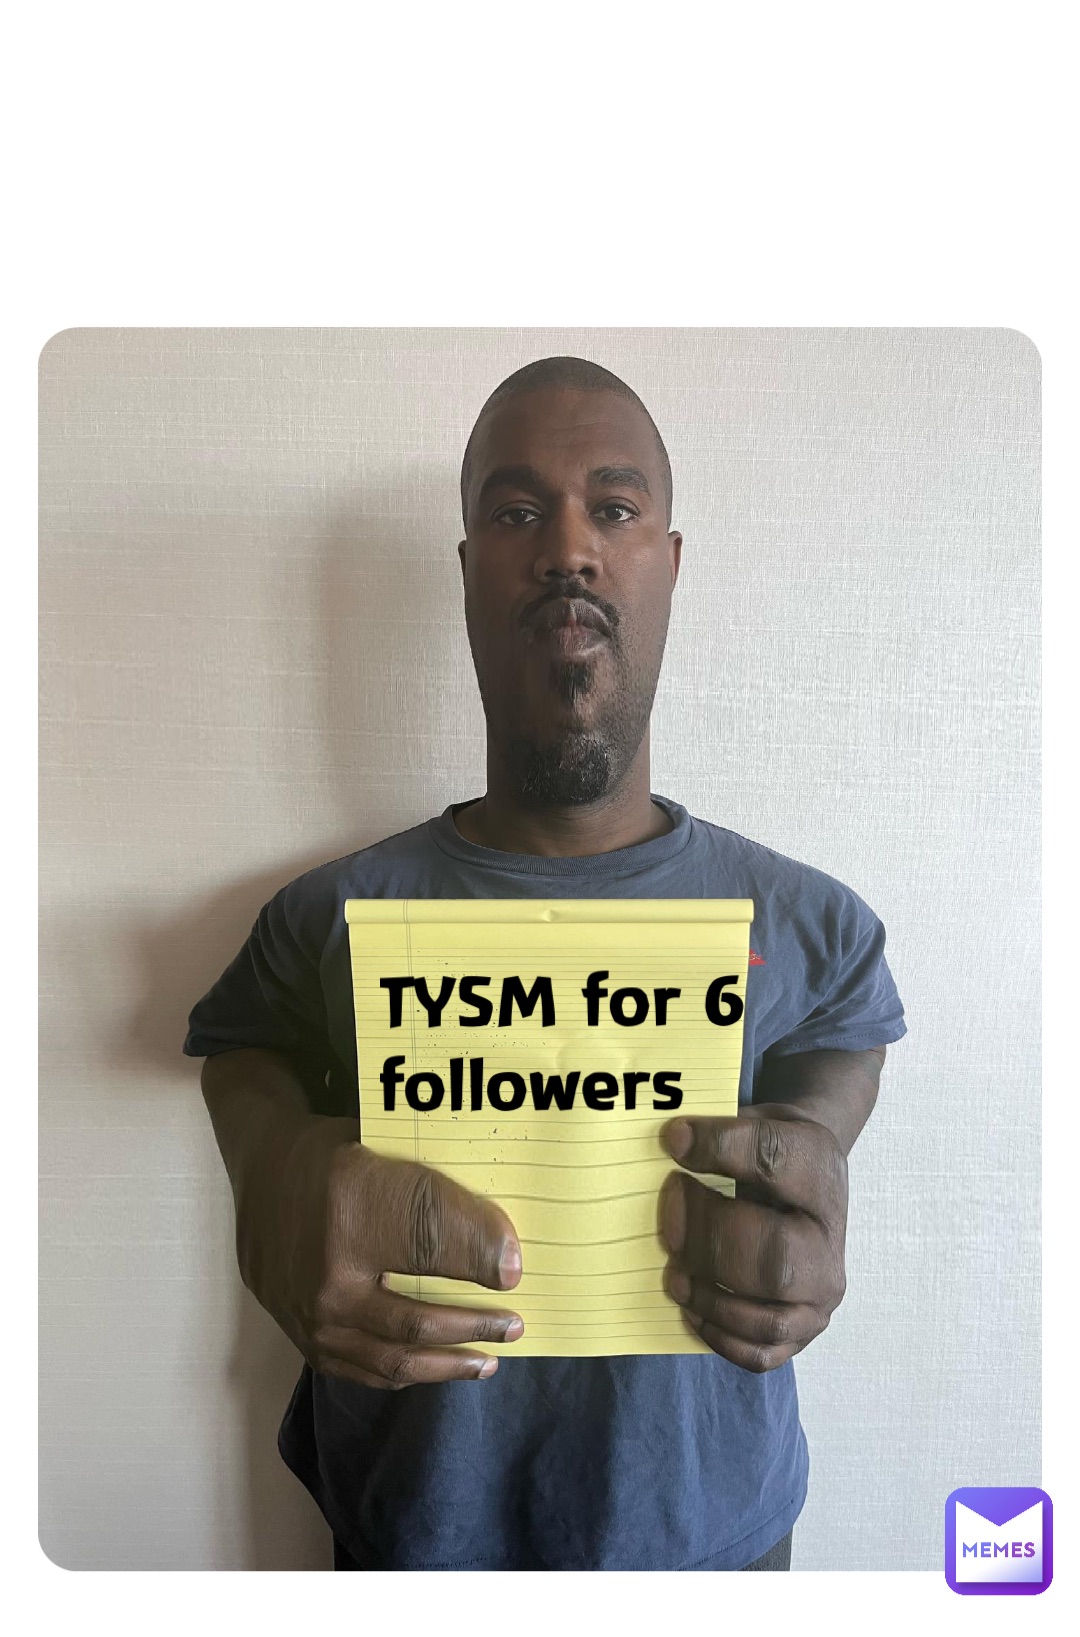 TYSM for 6 followers